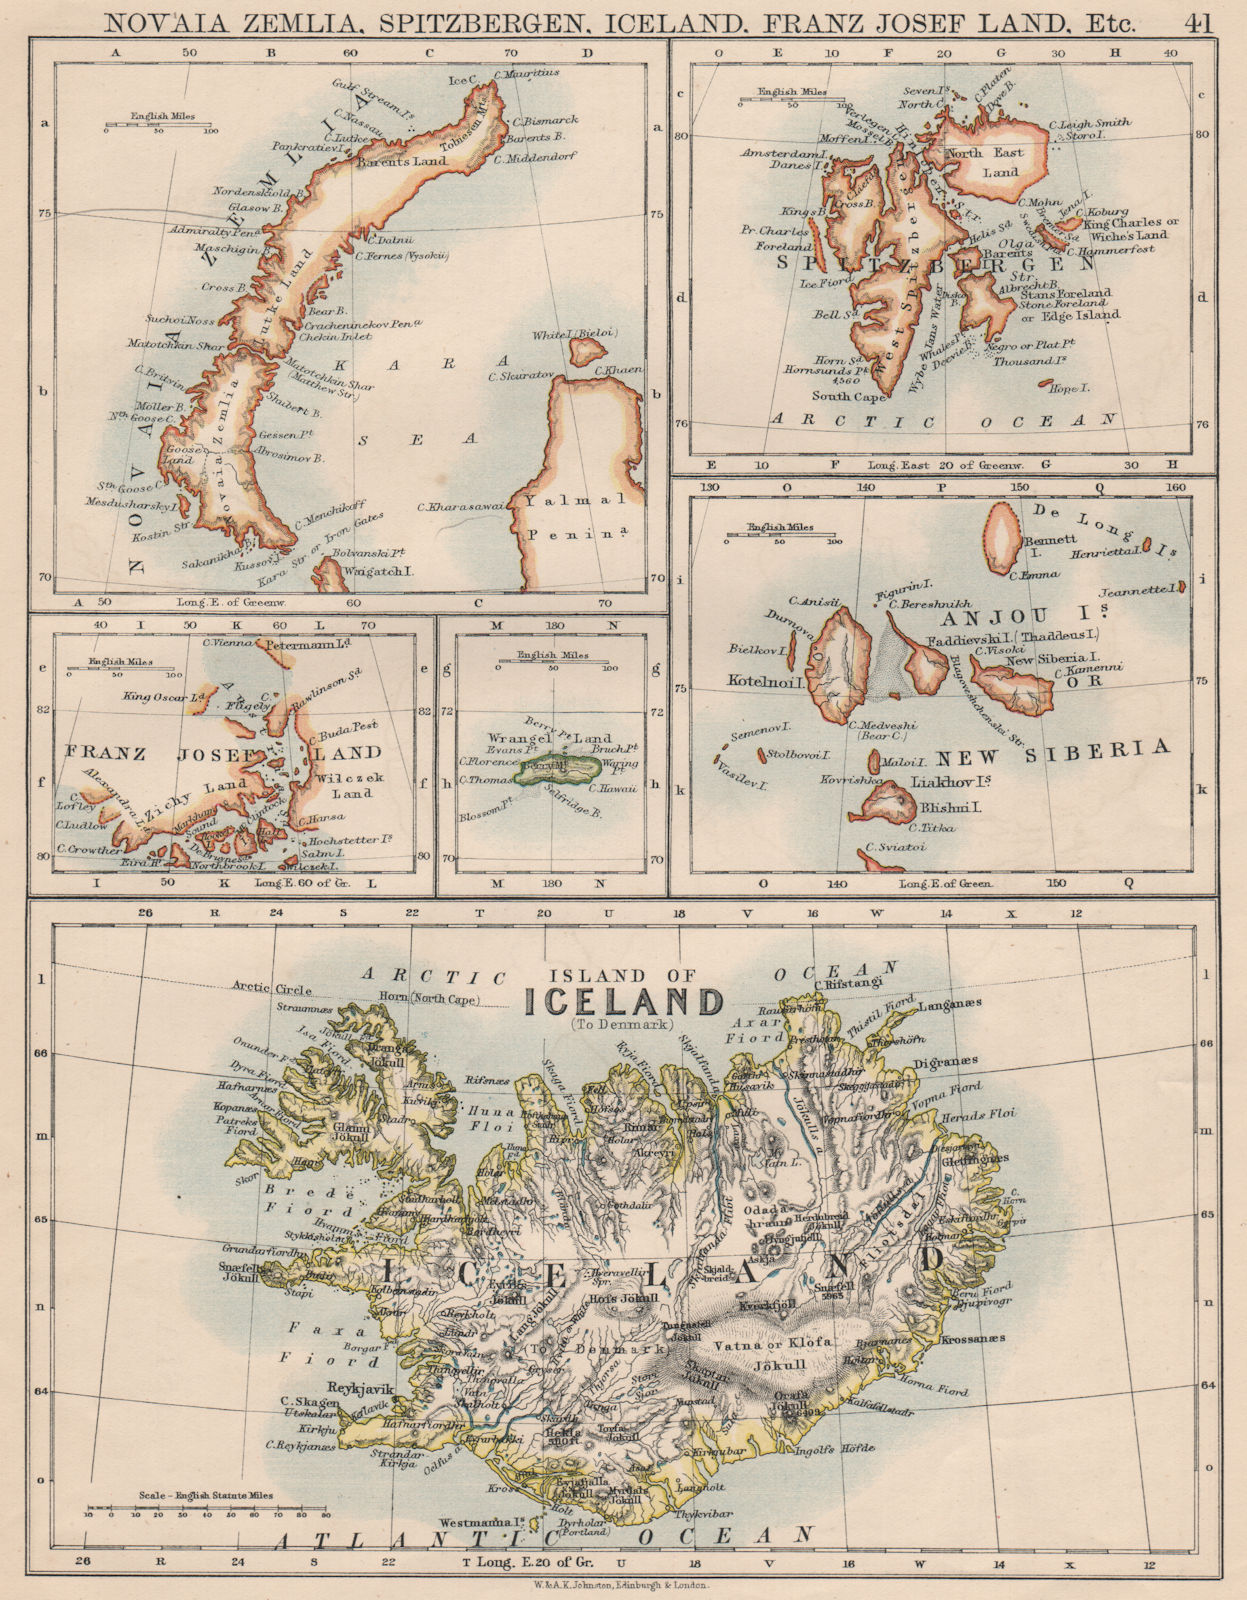 ARCTIC ISLANDS.Iceland Spitsbergen Franz Josef Land Novaya Zemlya 1895 old map